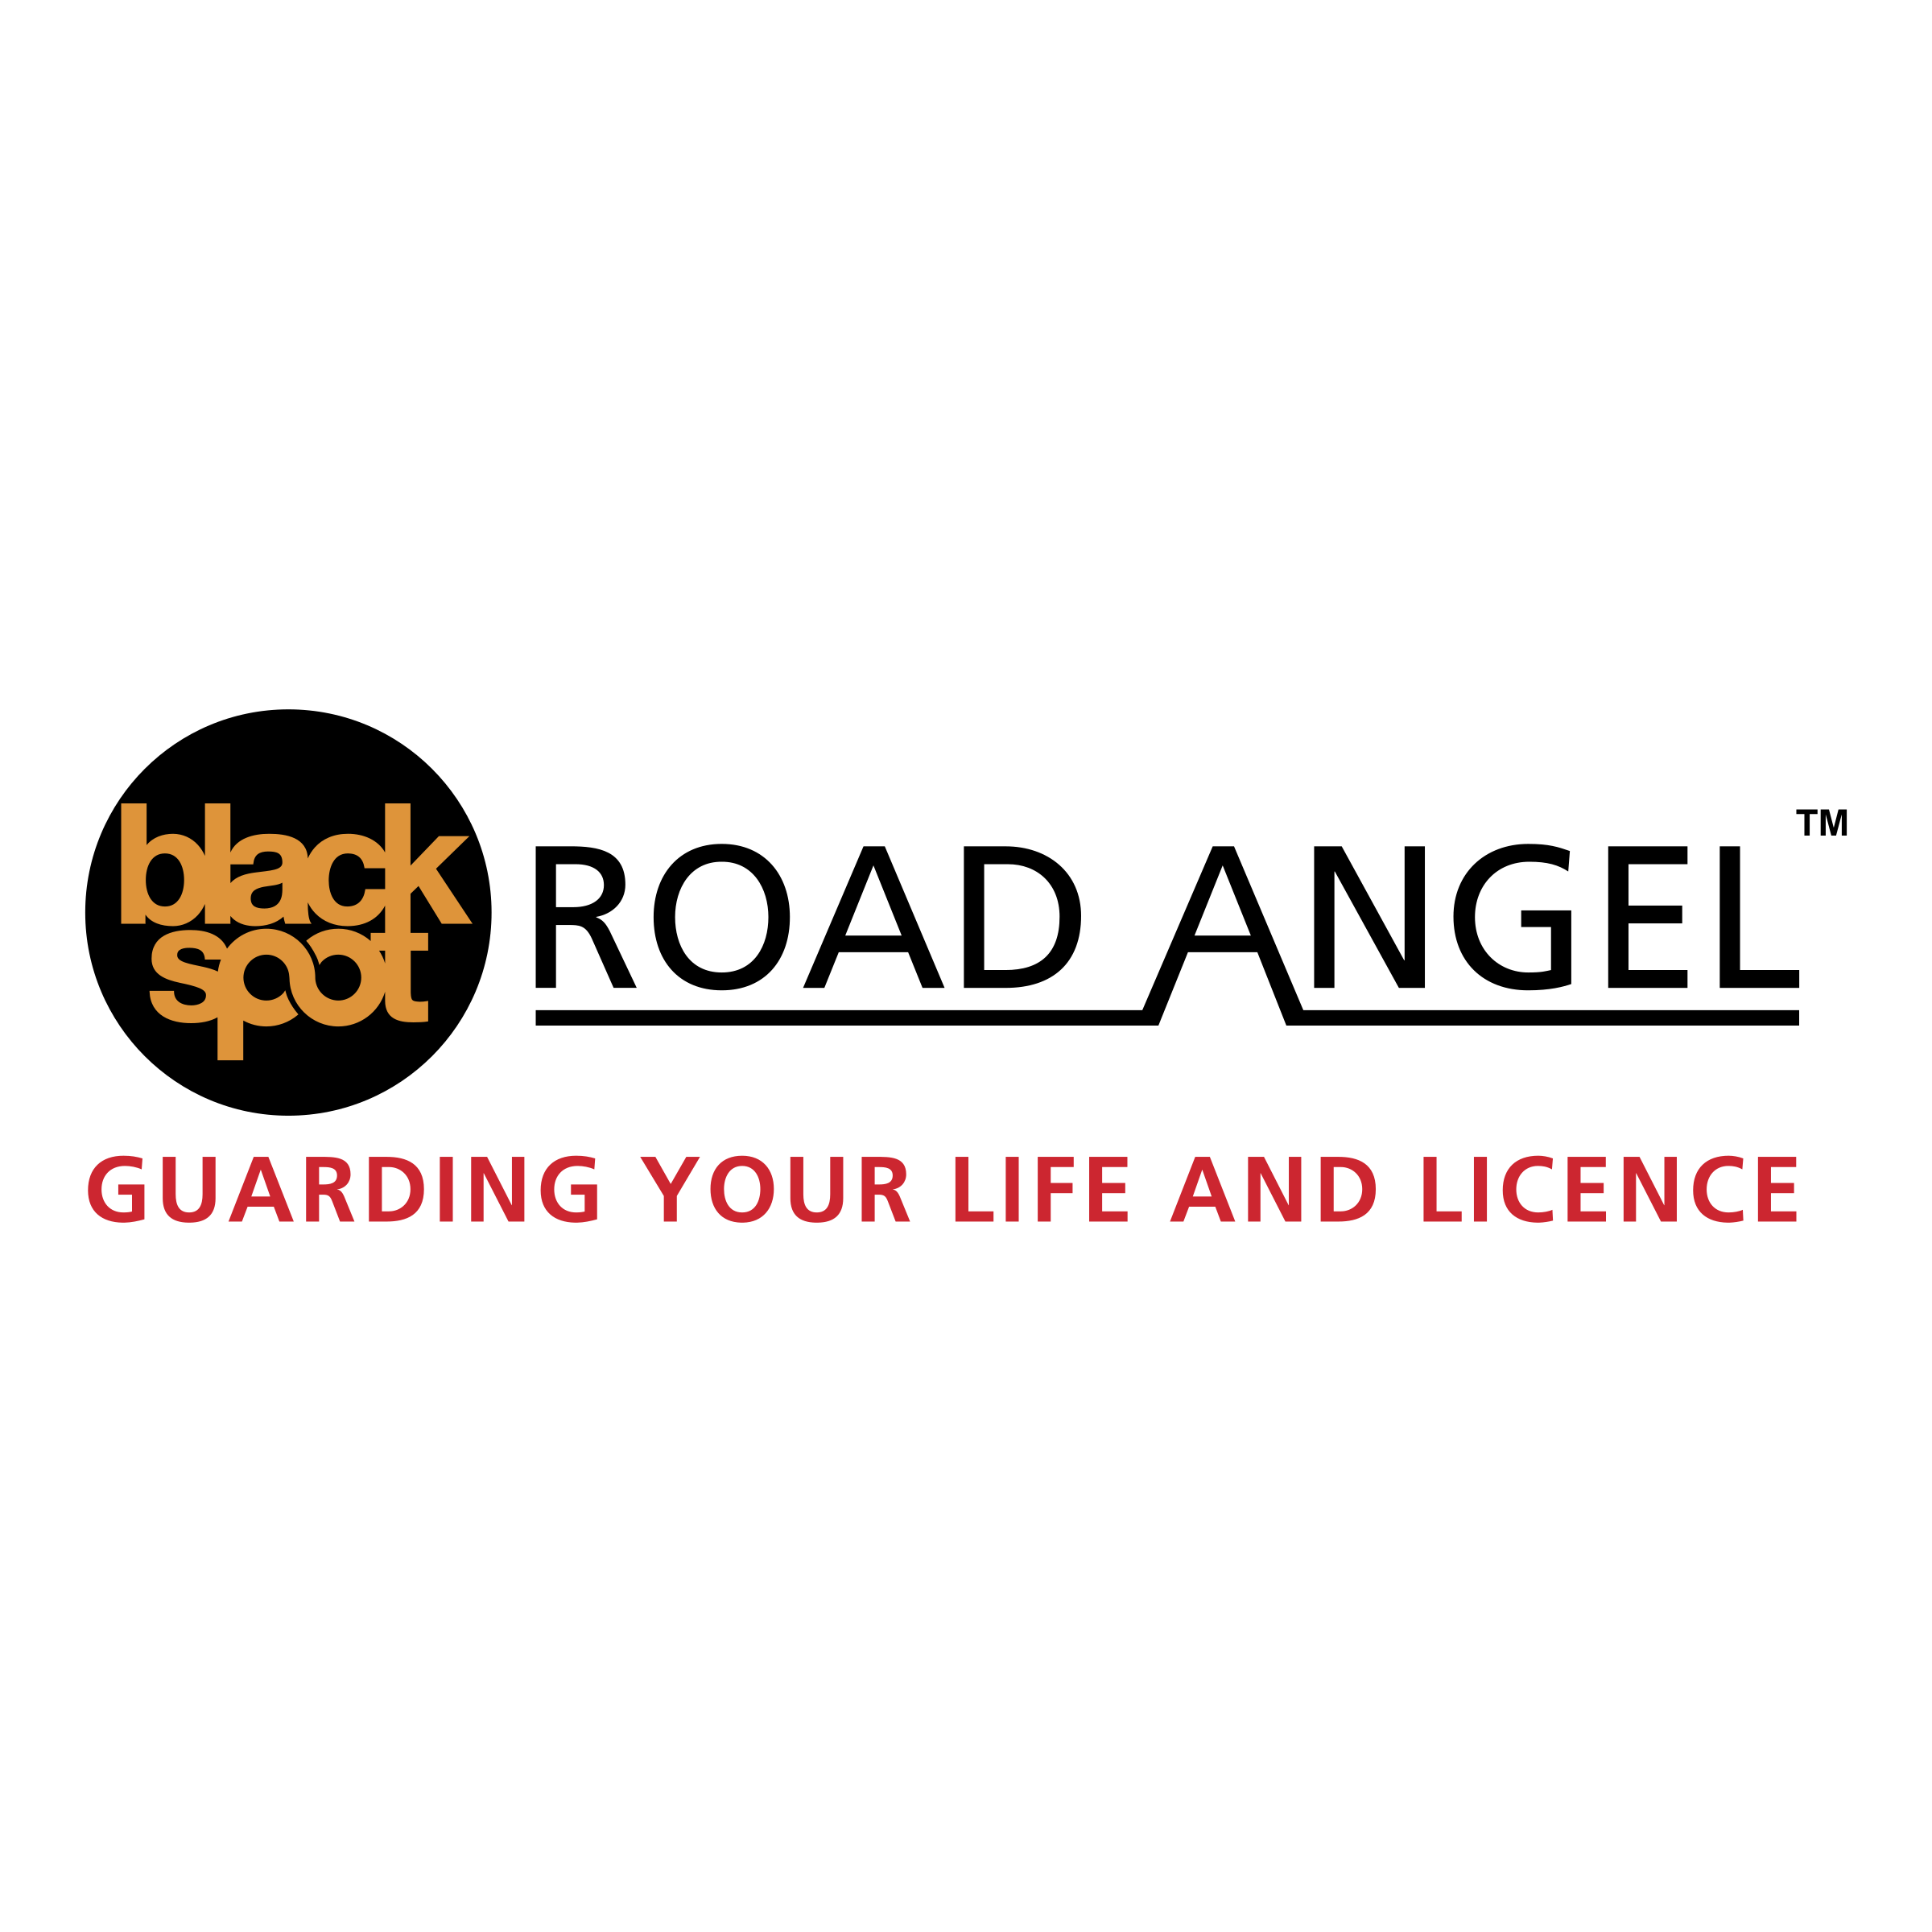 Black Spot Logo - Blackspot Road Angel Logo PNG Transparent & SVG Vector - Freebie Supply